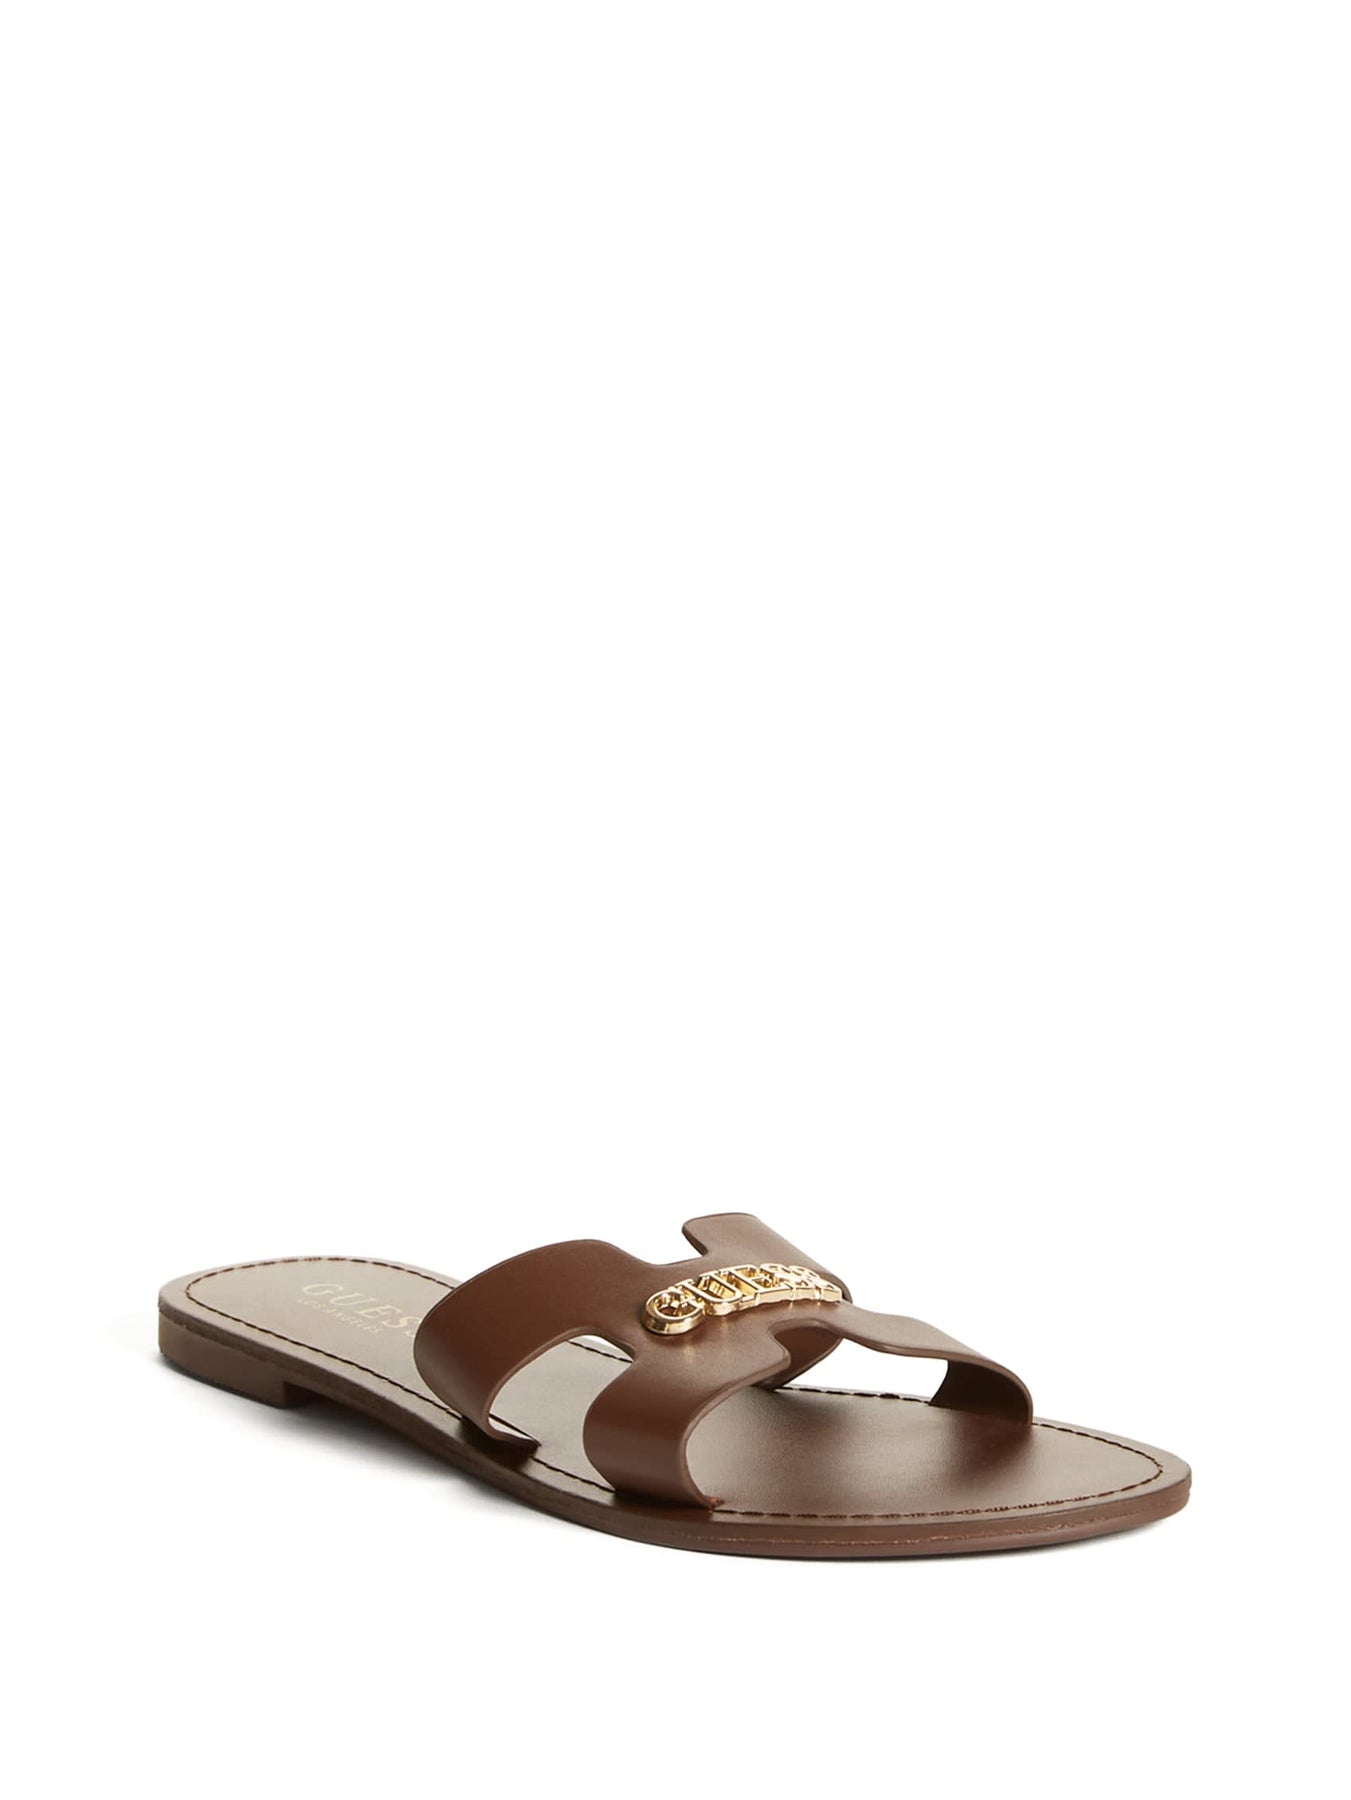 Guess Factory Isabell Slide Sandals | Shop Premium Outlets